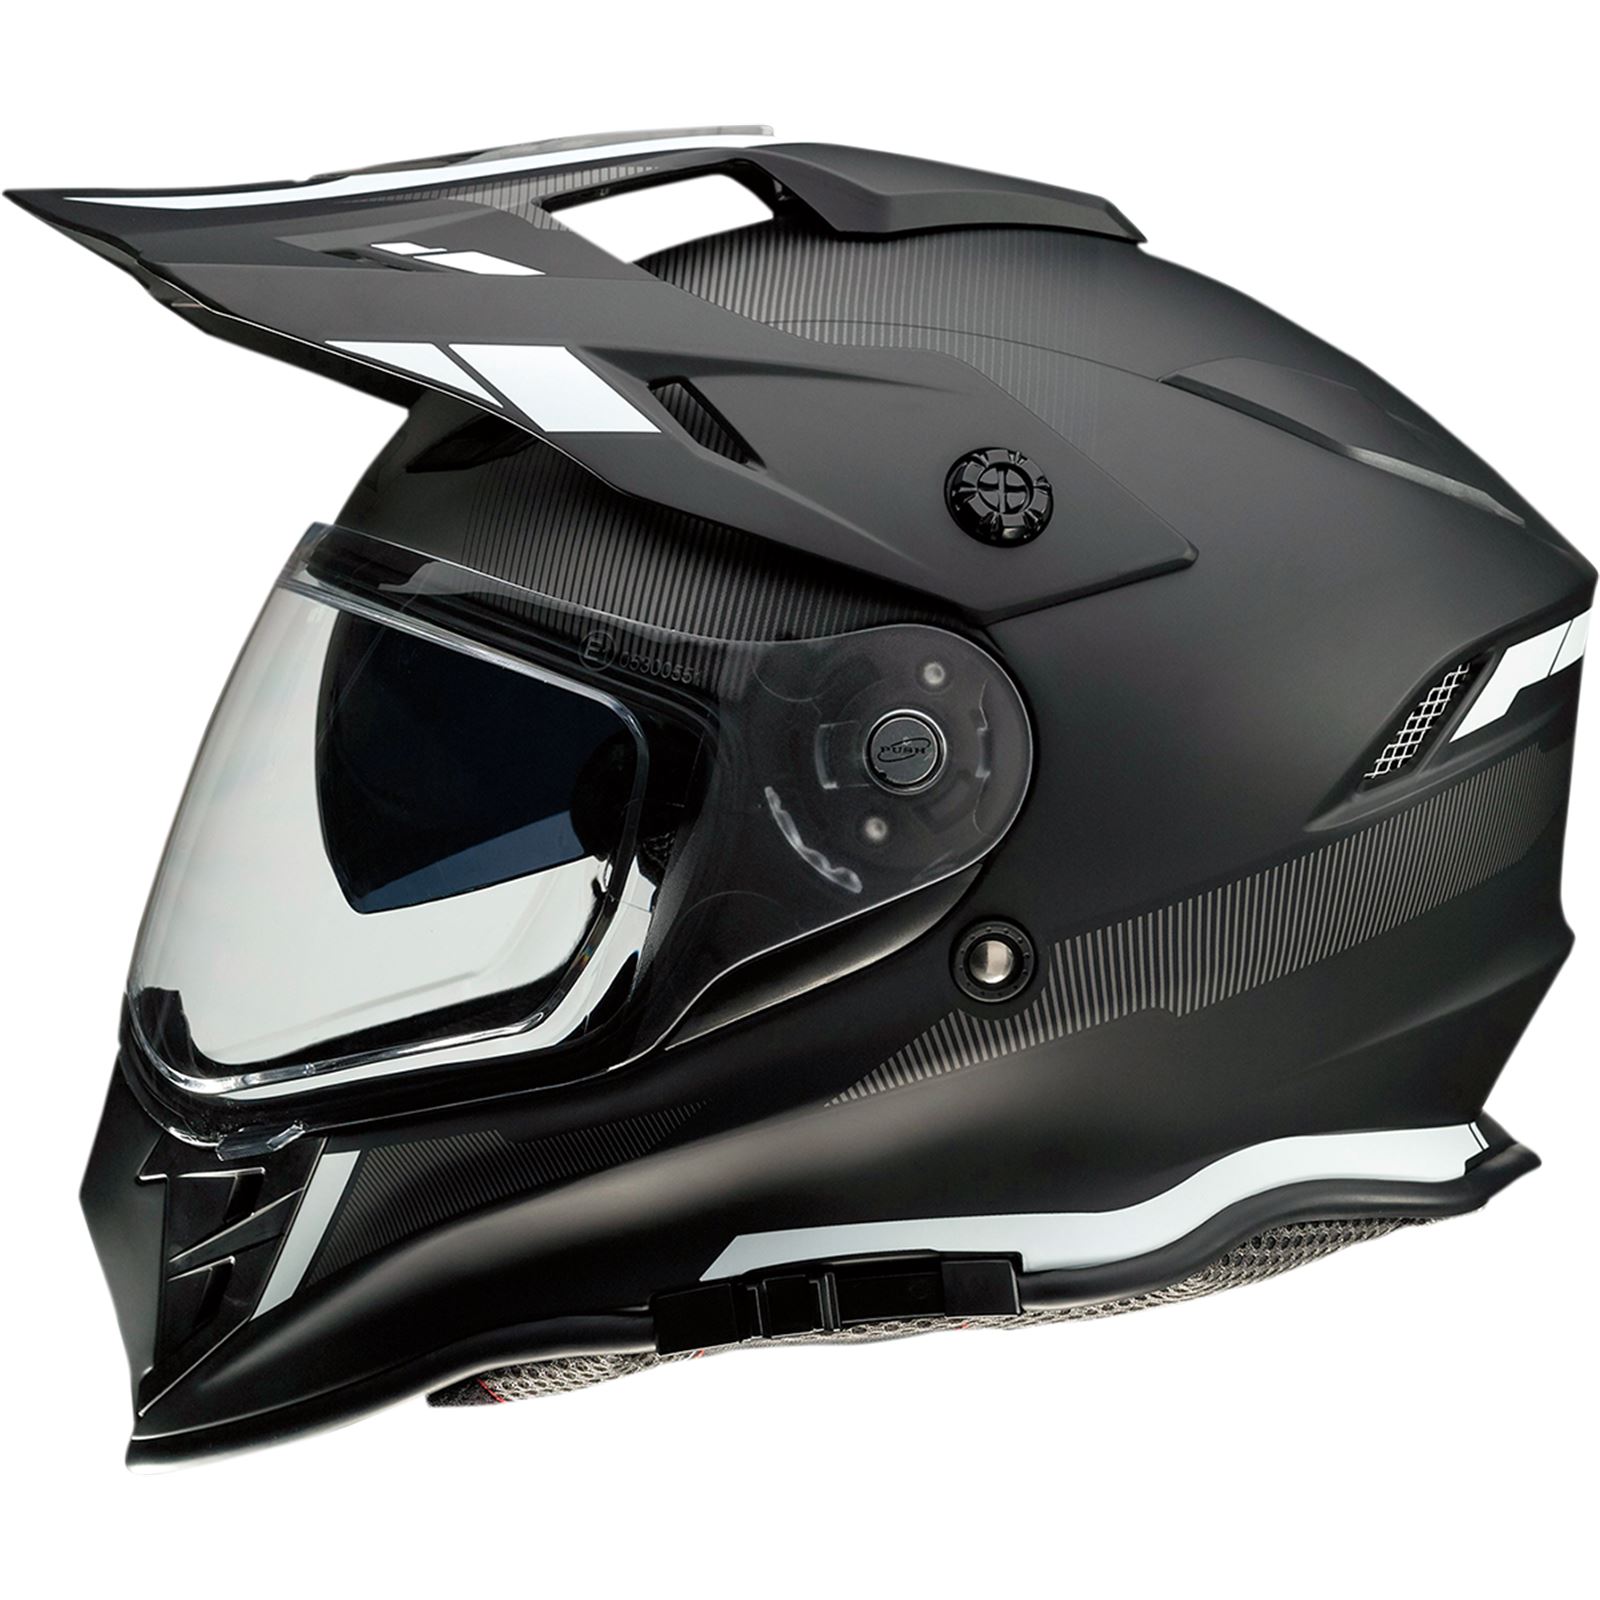 Z1R Range Helmet - Uptake - Black/White - Large